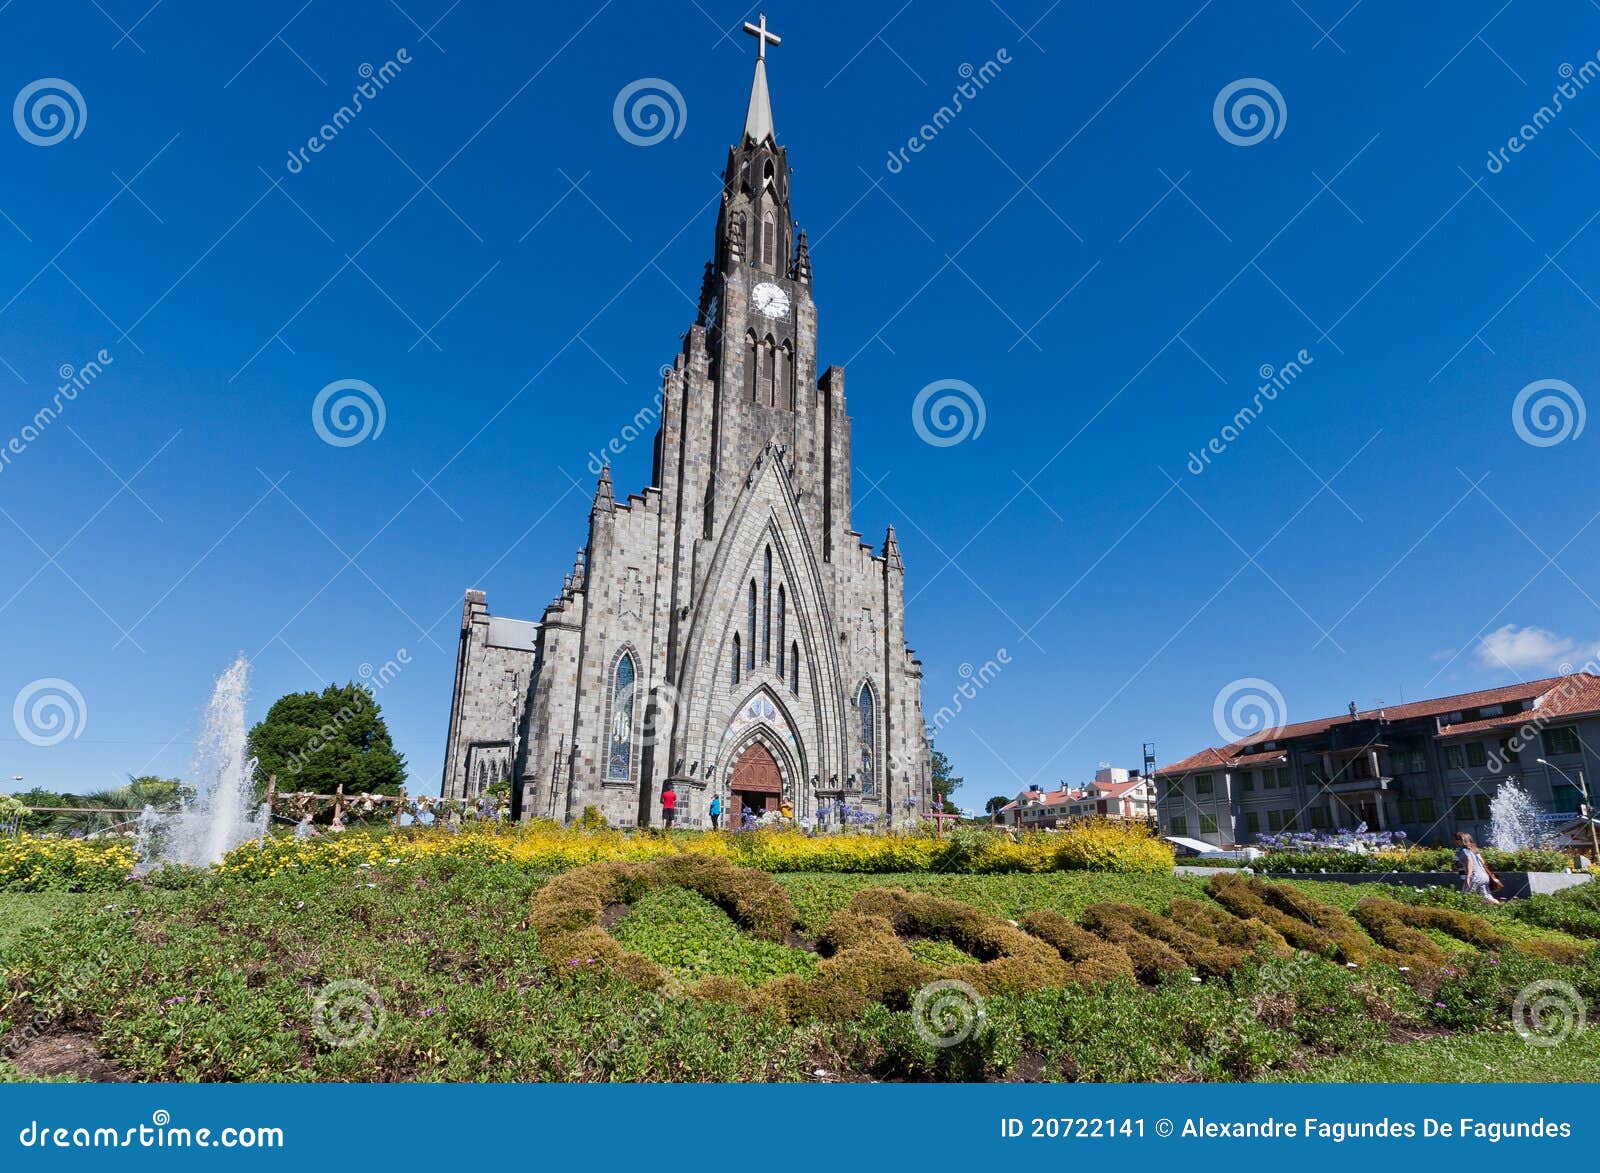 stone cathedral of canela brazil